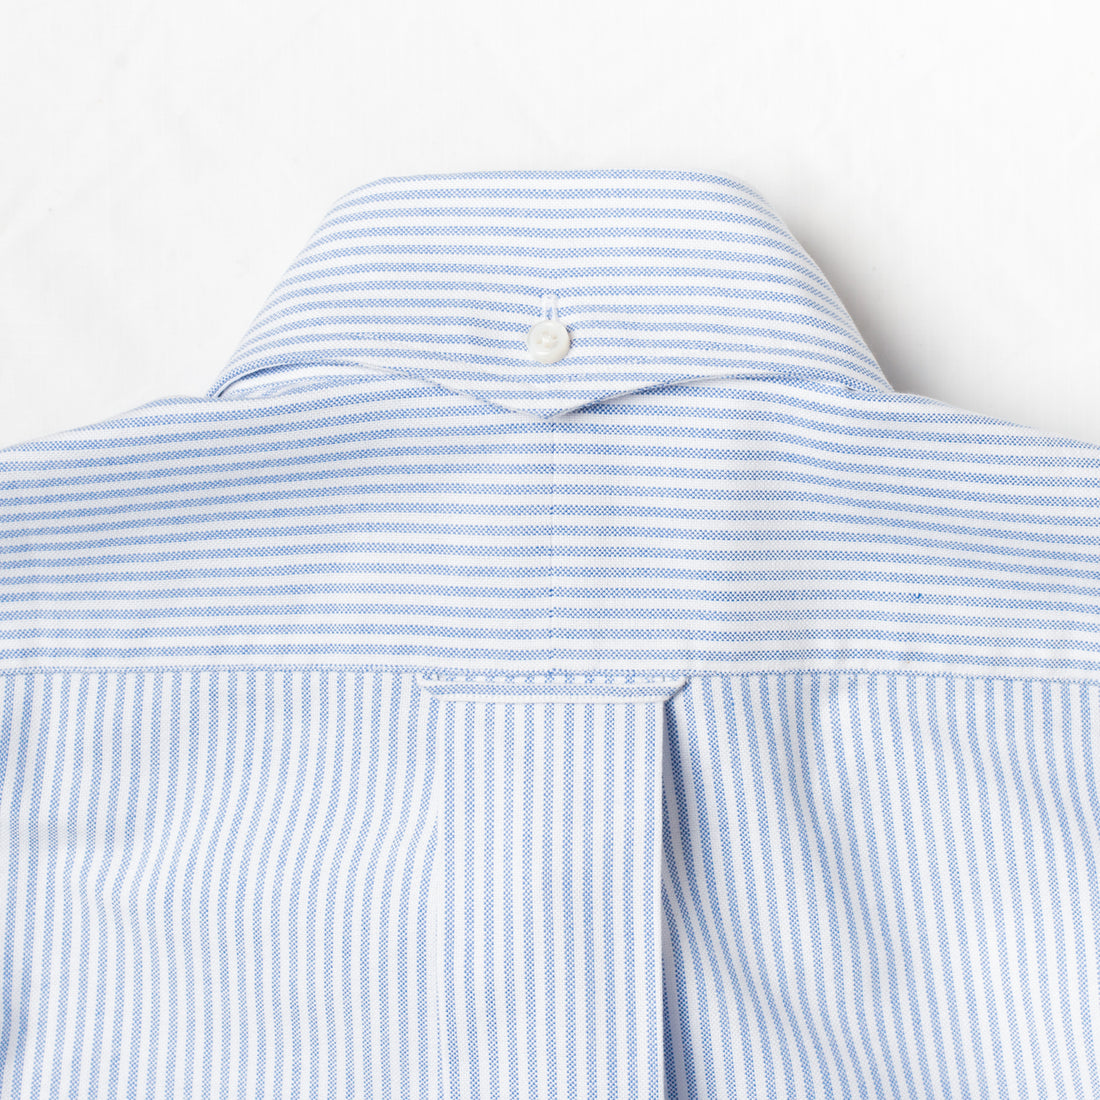 Bryceland's Perfect OCBD Striped Shirt Blue